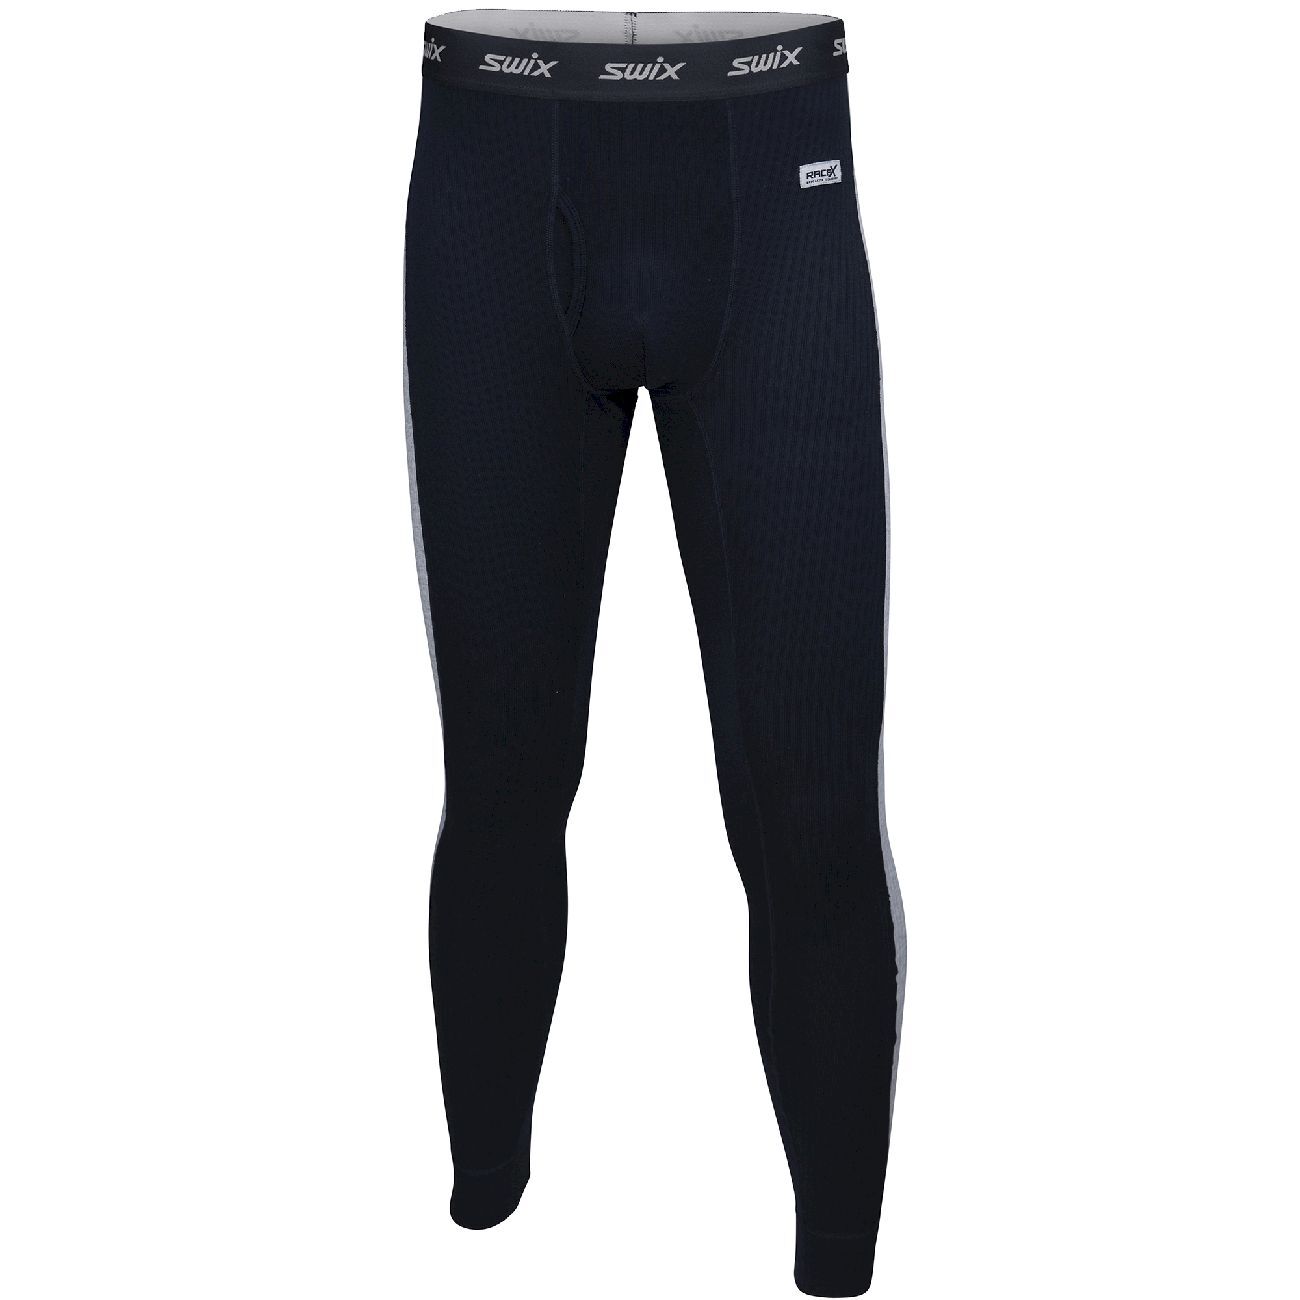 Swix Racex Bodywear Pant - Leggings - Men's